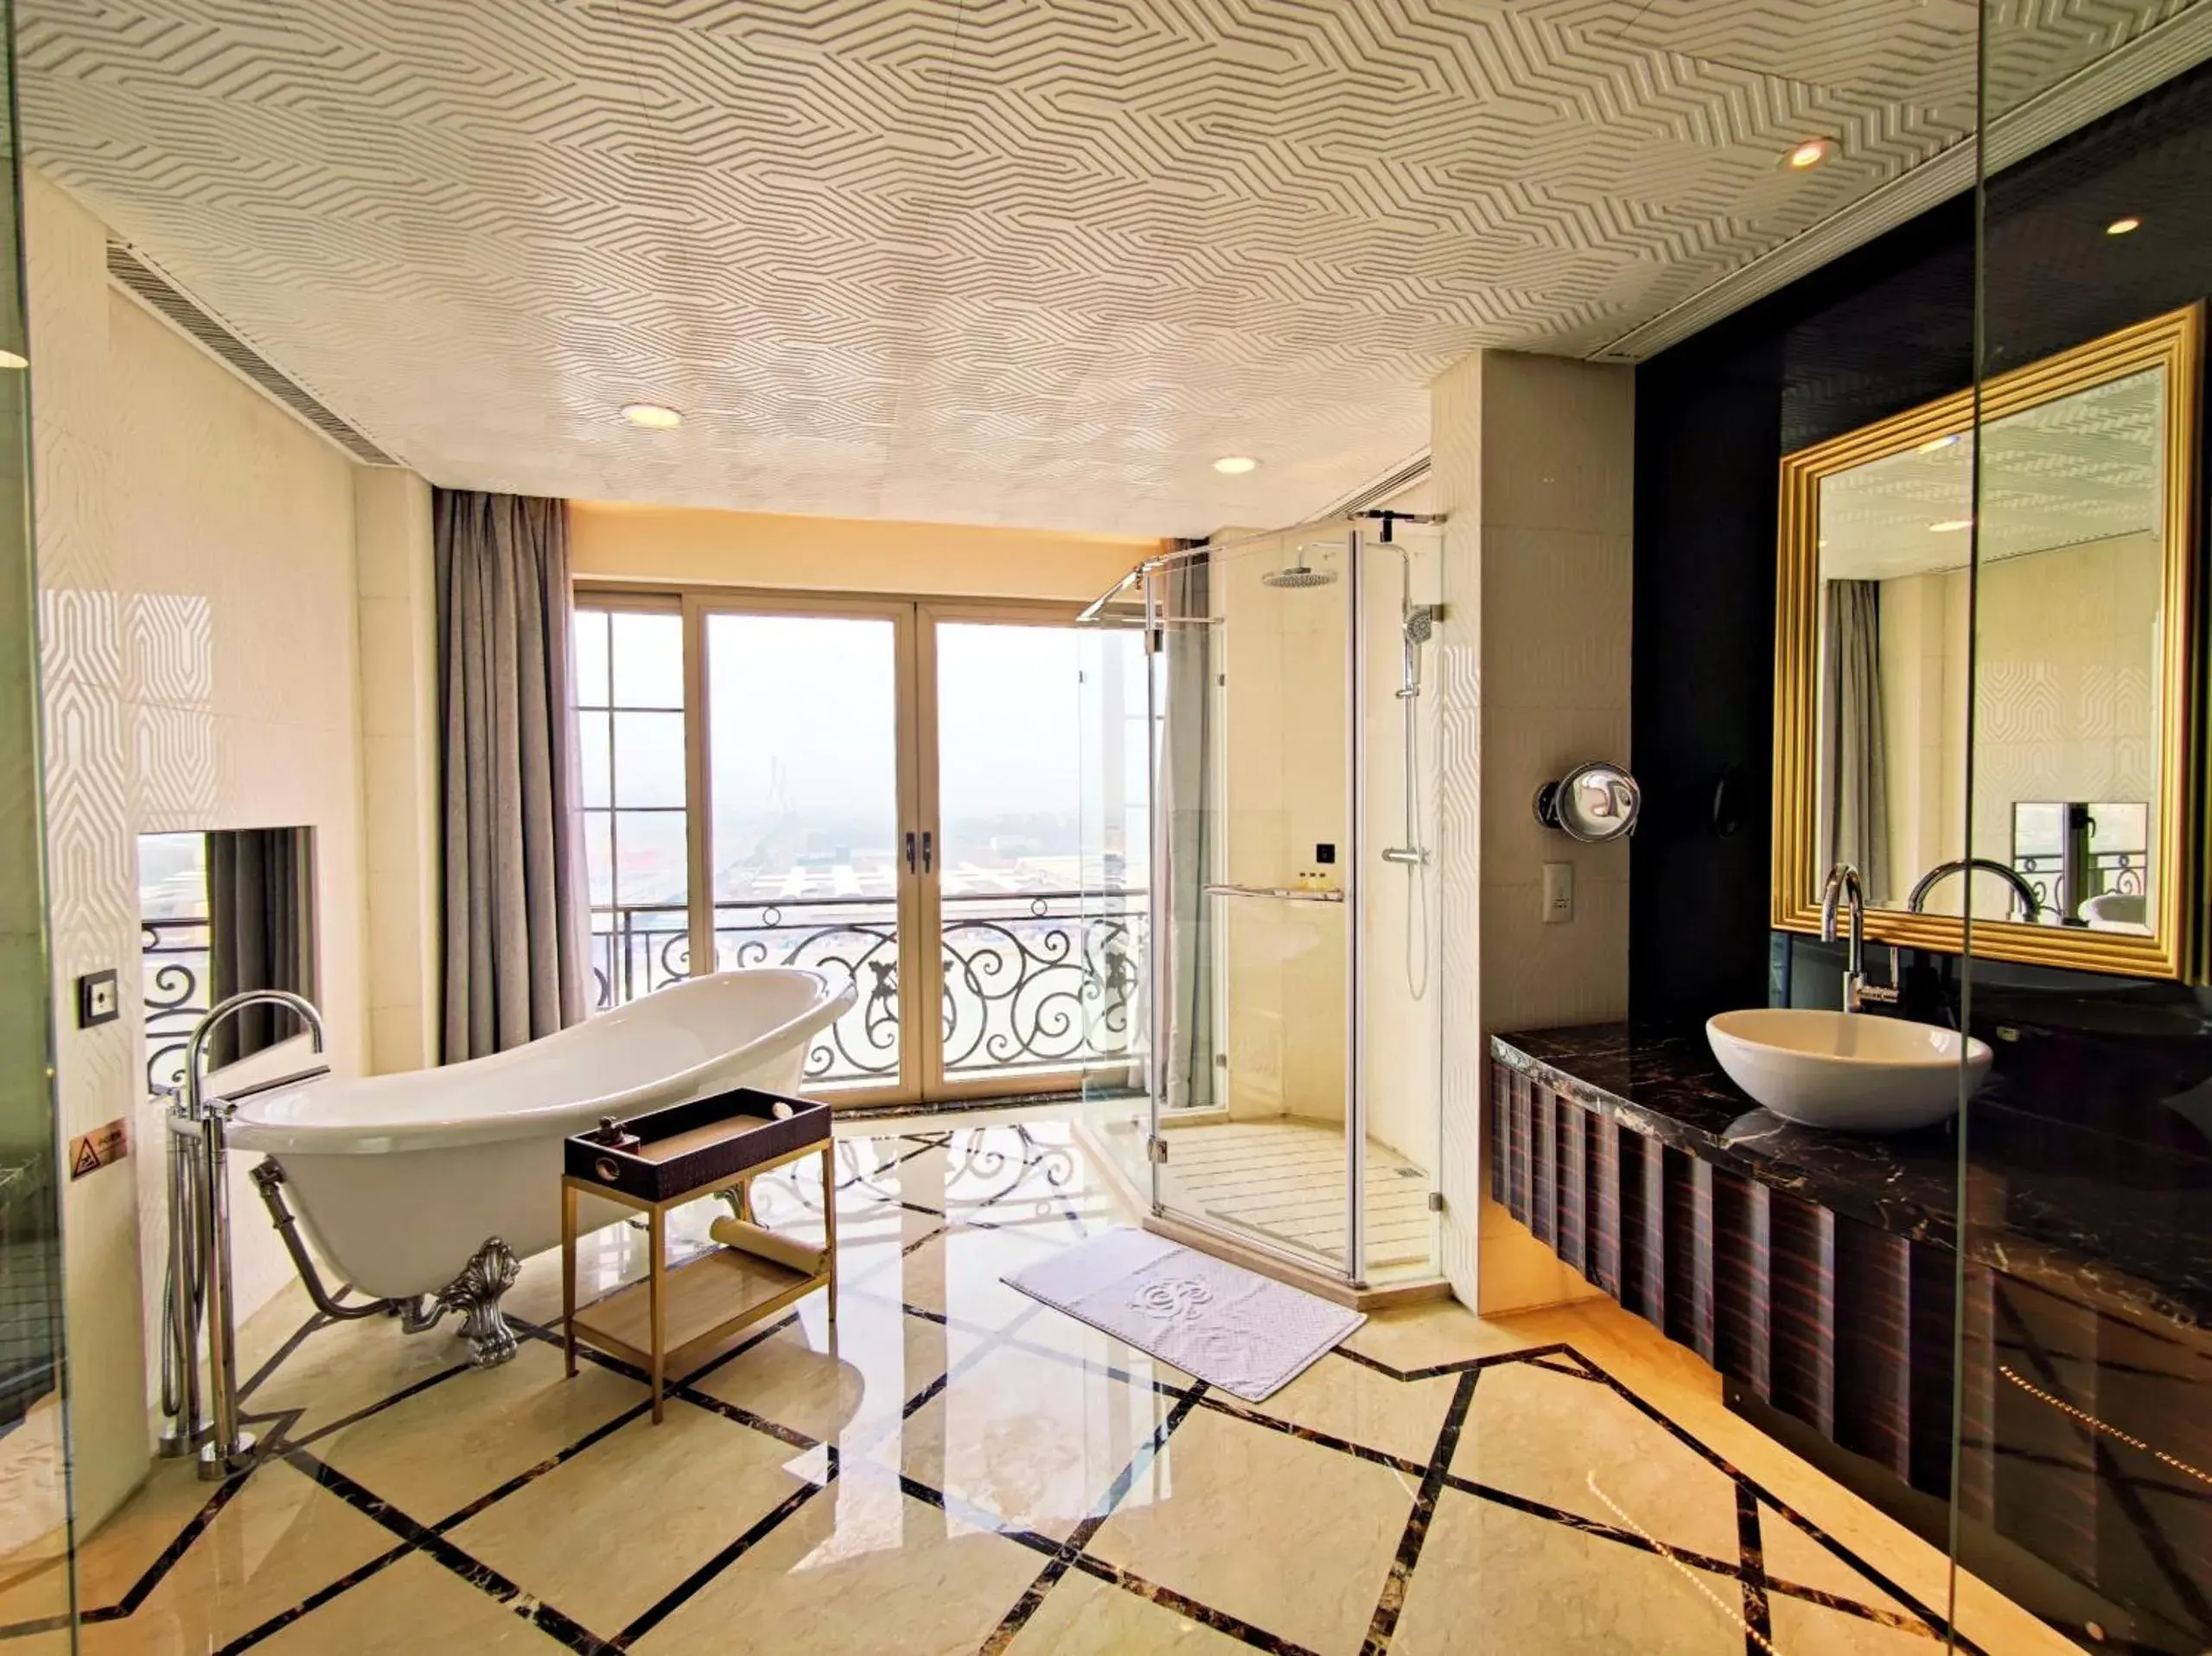 Bedroom, Bathroom in Chateau Star River Guangzhou-Chateau Star River Guangzhou-Trade Fair Shuttle Bus